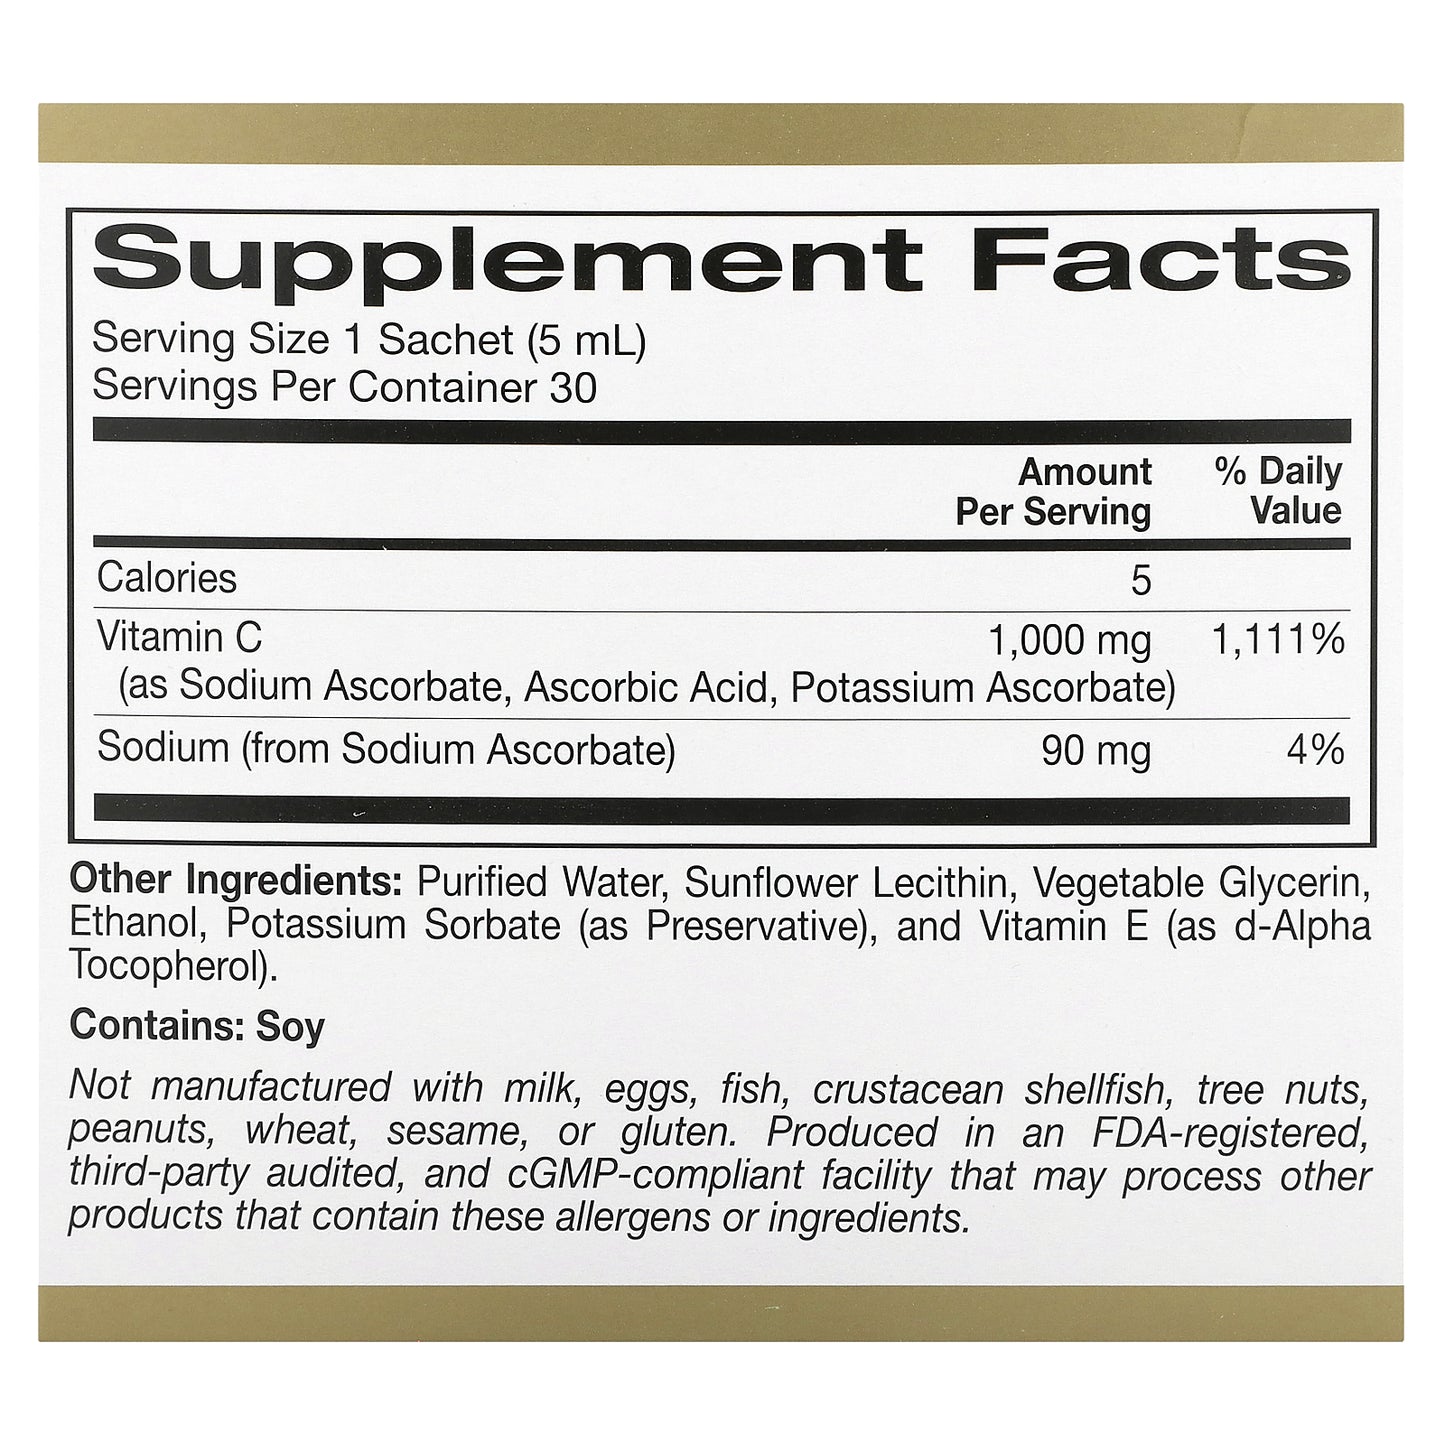 California Gold Nutrition, Liposomal Liquid Vitamin C, Unflavored, 1,000 mg, 30 Sachets